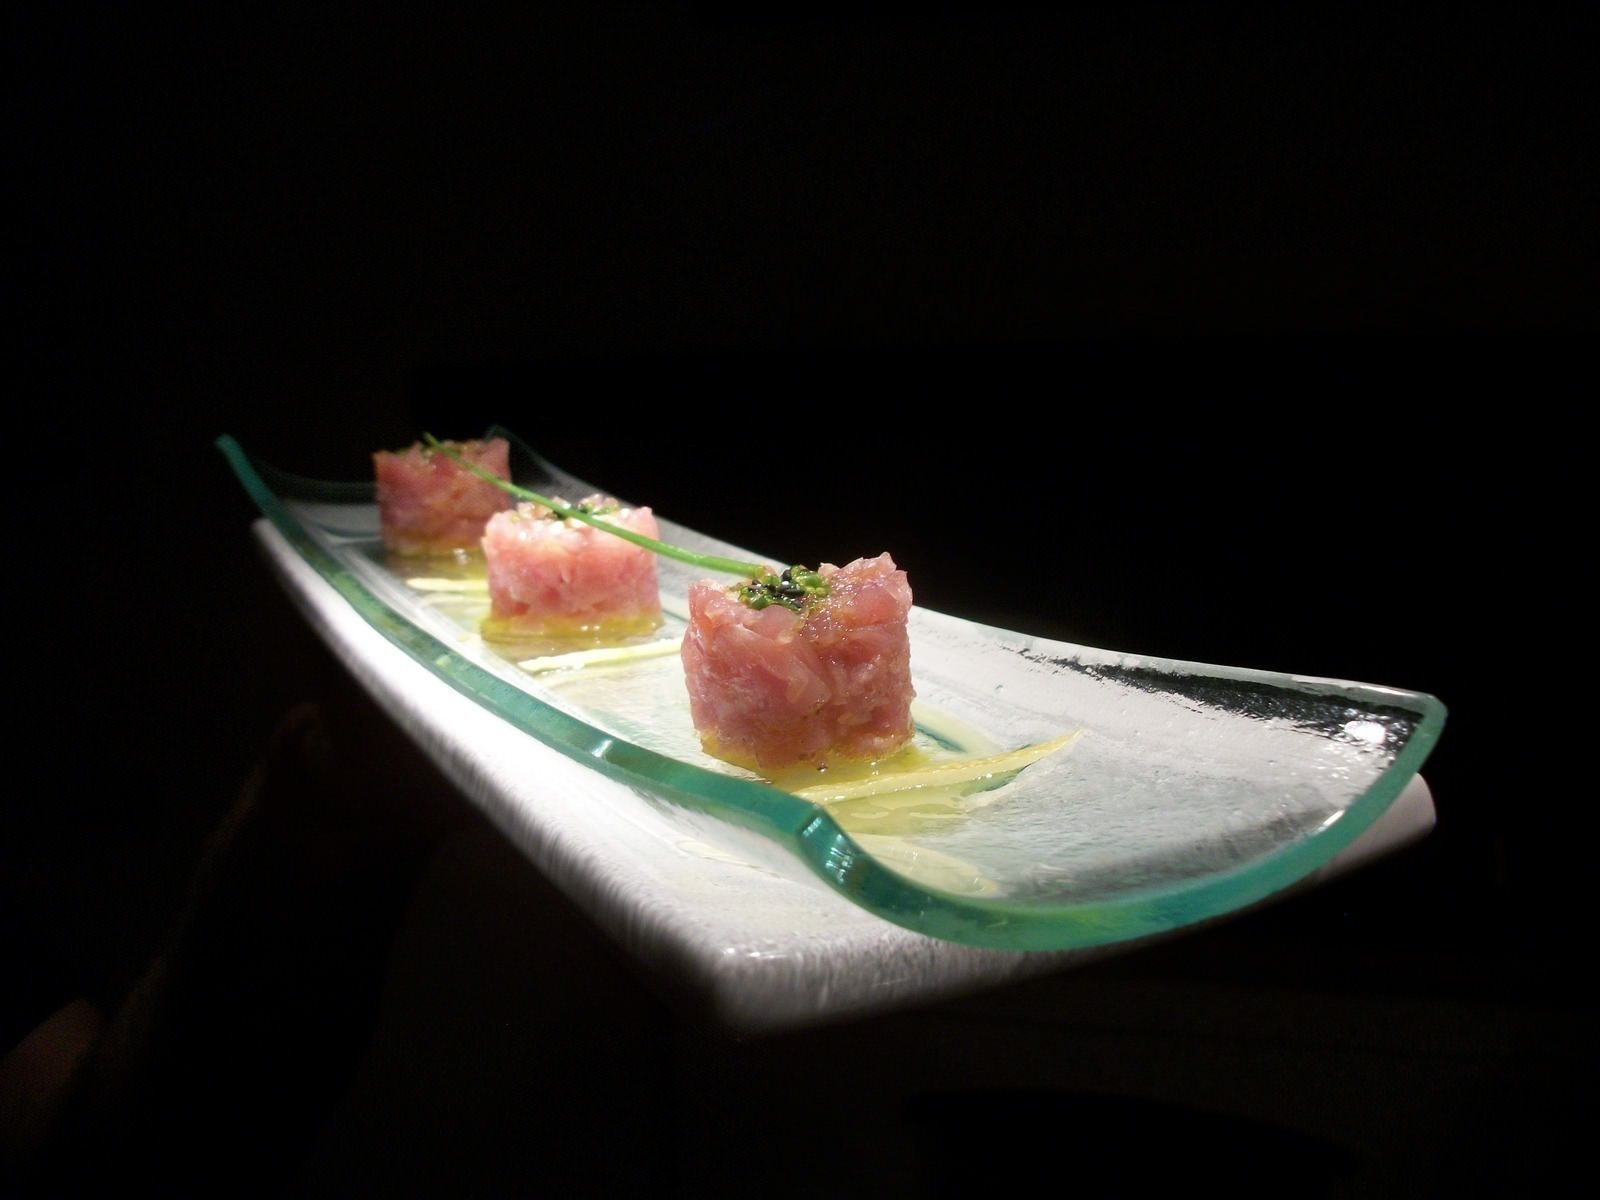 close up of three individual bites of "tuna" on a glass serving dish by Tarik Abdullah - Jordan Winery food photo contest 4th place winner